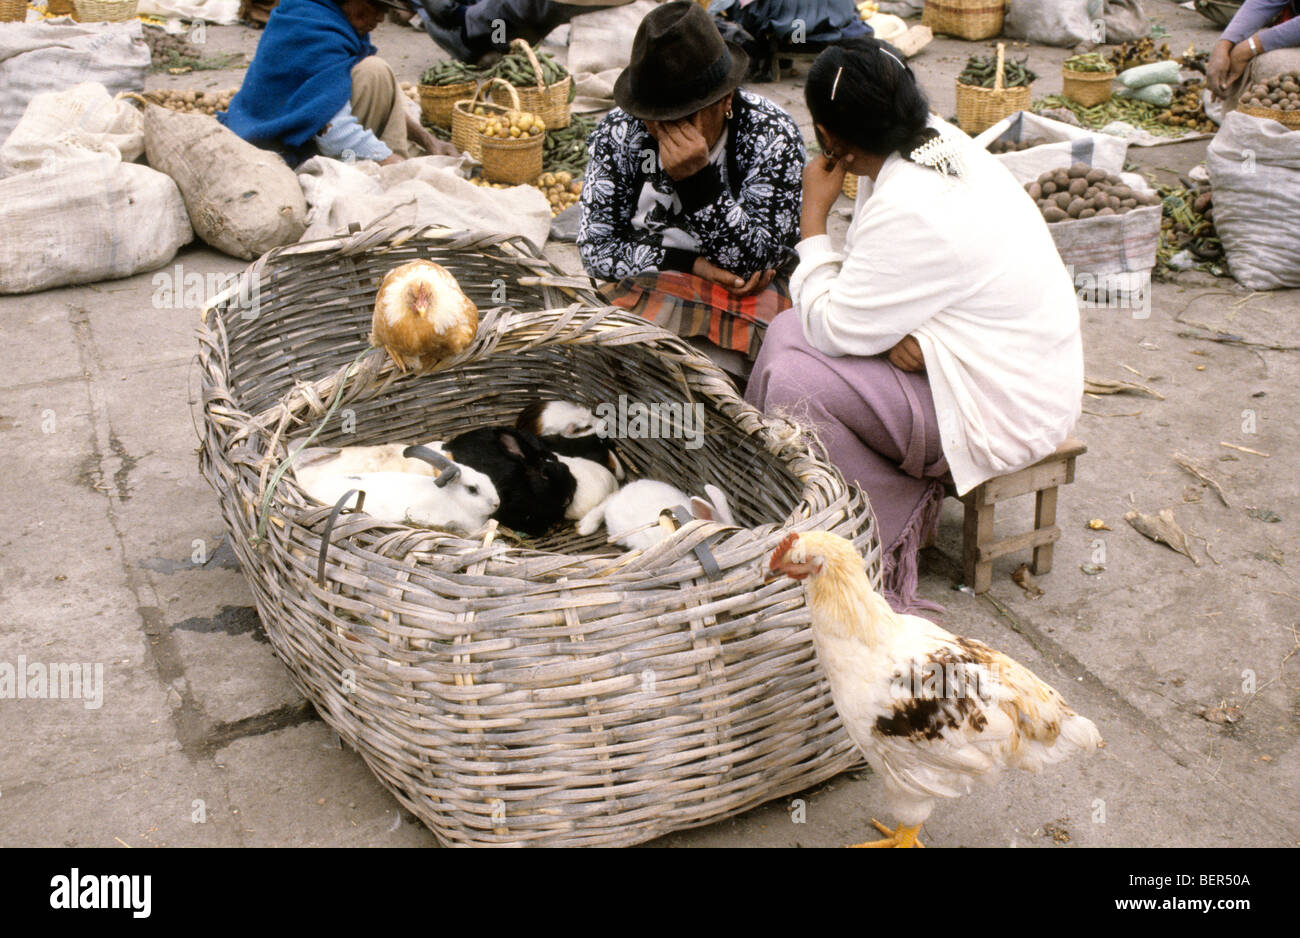 Two women sit on short stools beside huge basket containing rabbits.  Ecuador highlands local market. Stock Photo